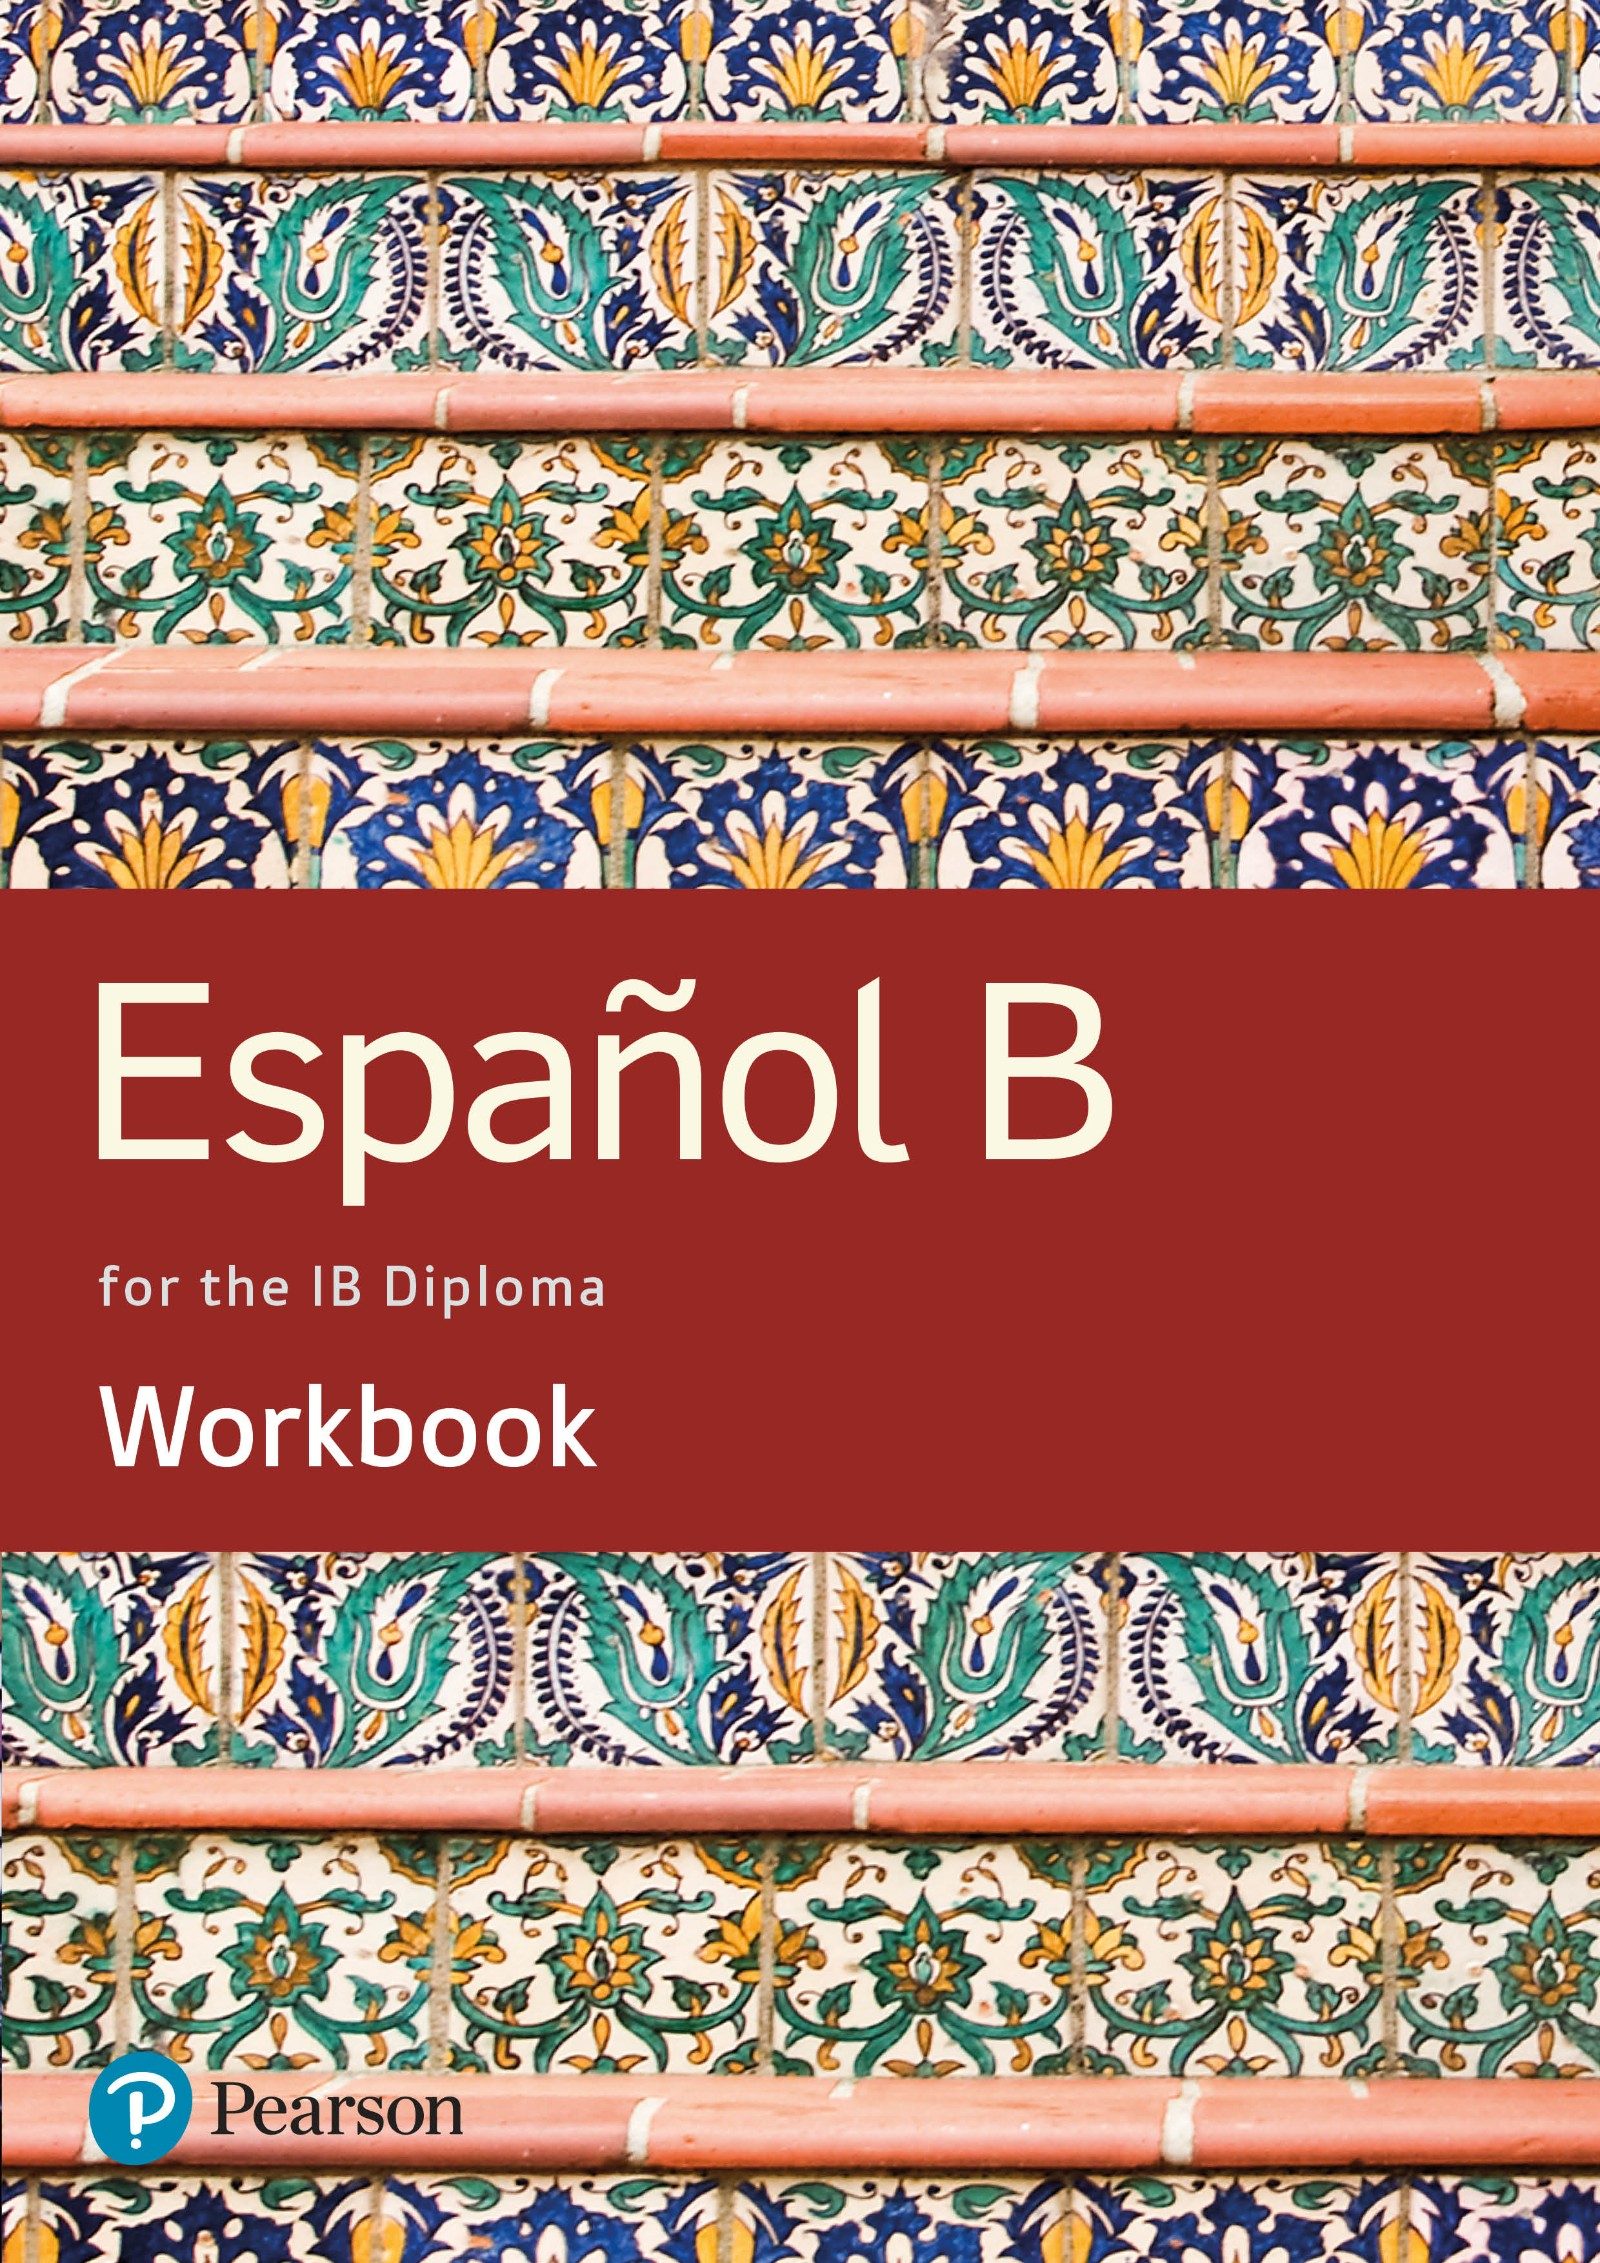 Featured image for “Español B Workbook”